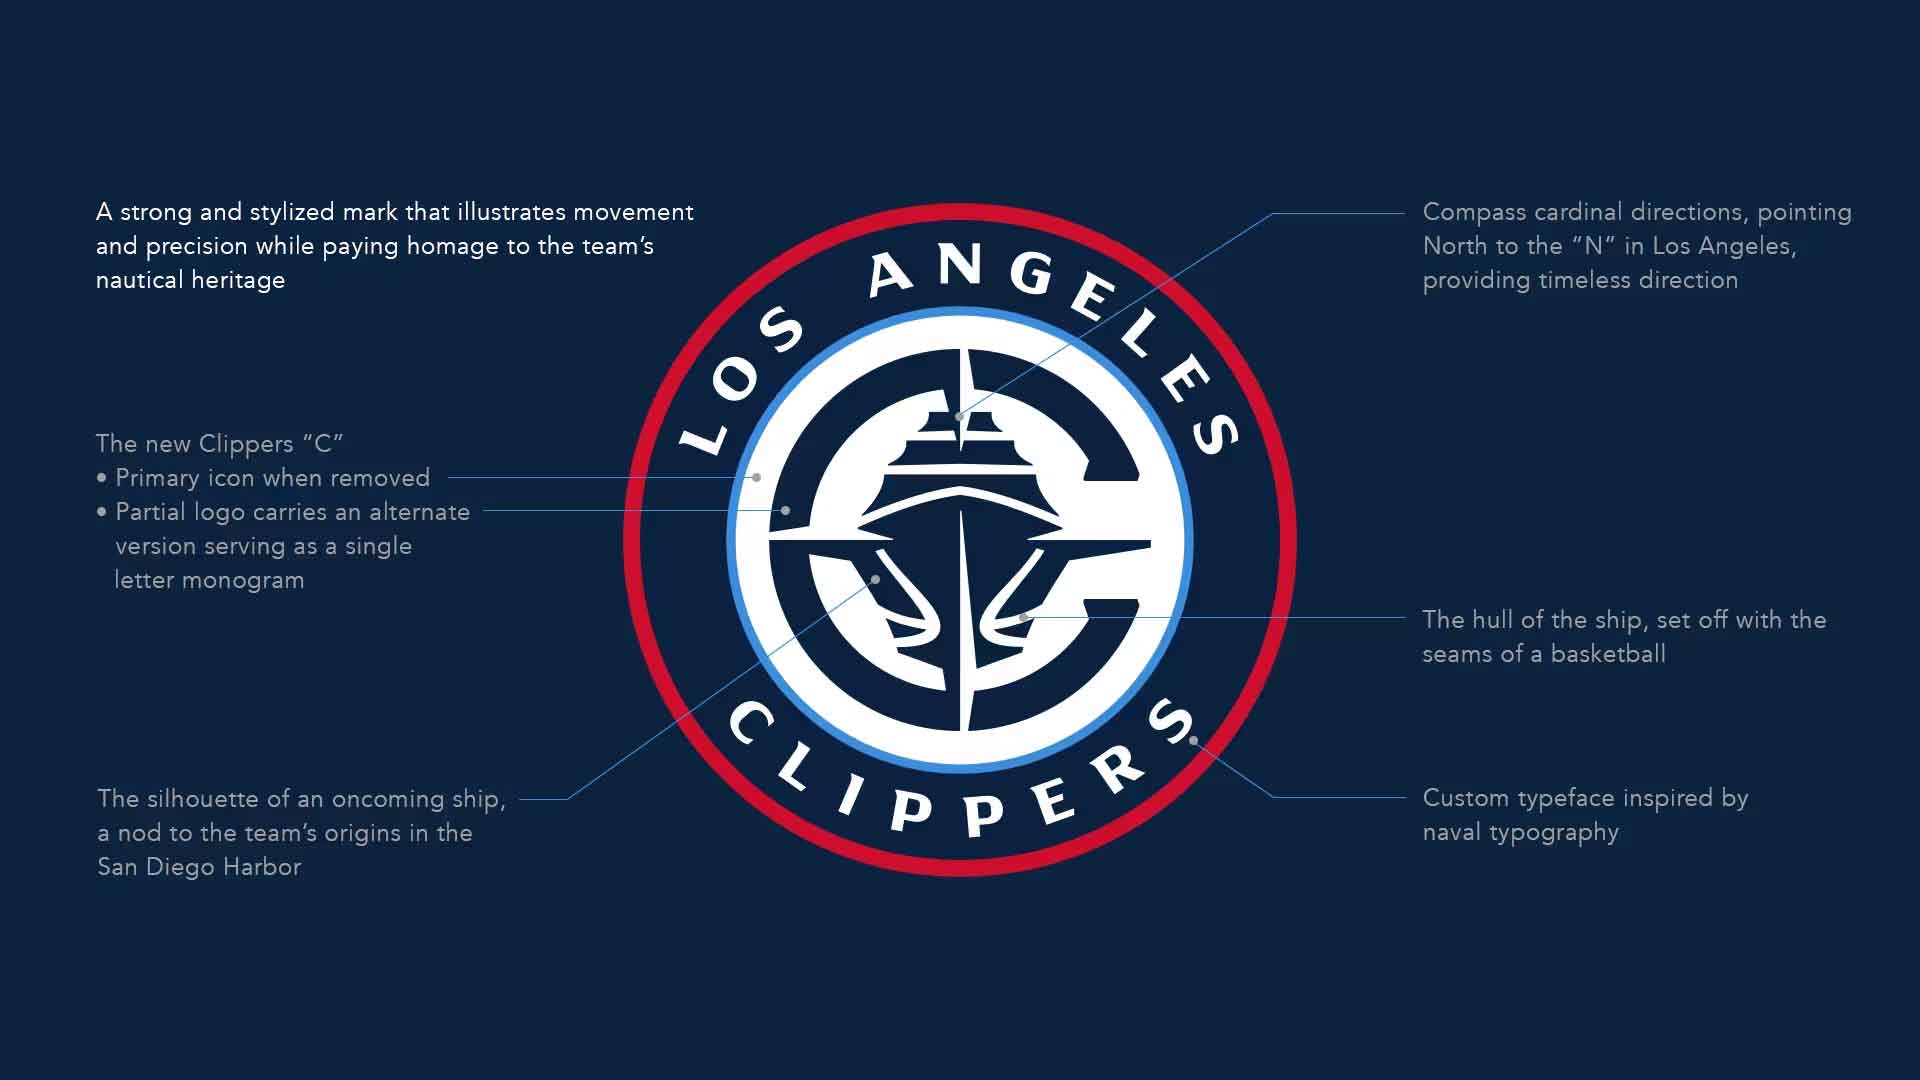 Web 240226 New Clippers Logo 4 ?quality=85&strip=all&w=1920